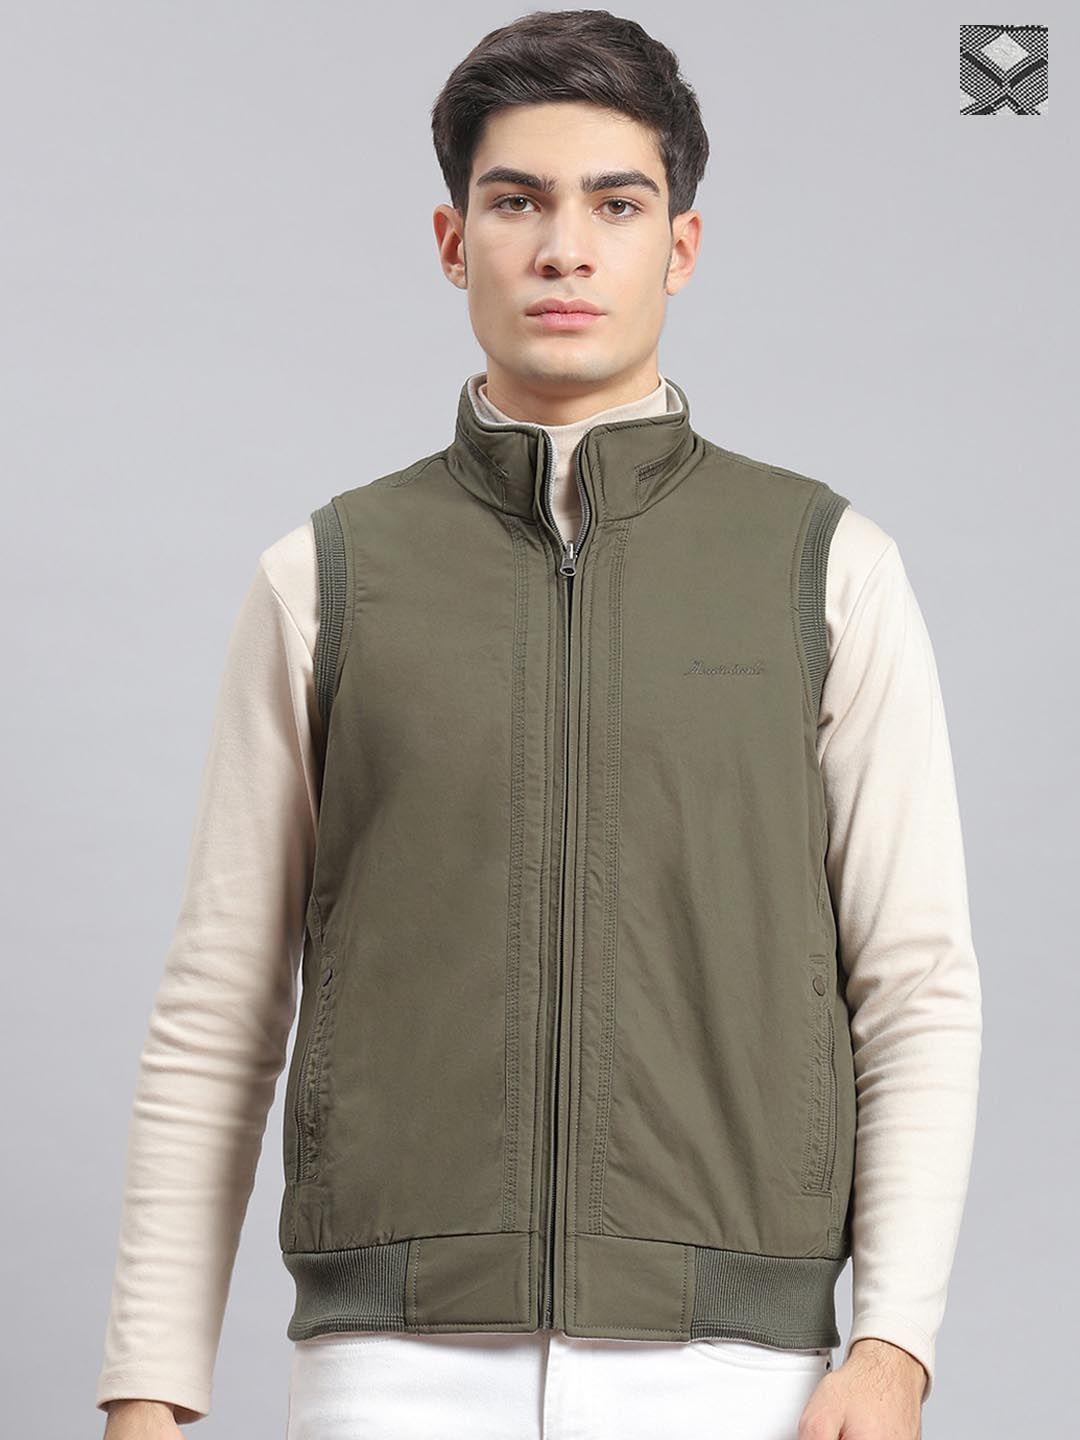 monte carlo ethnic motifs printed stand collar sleeveless cotton reversible bomber jacket